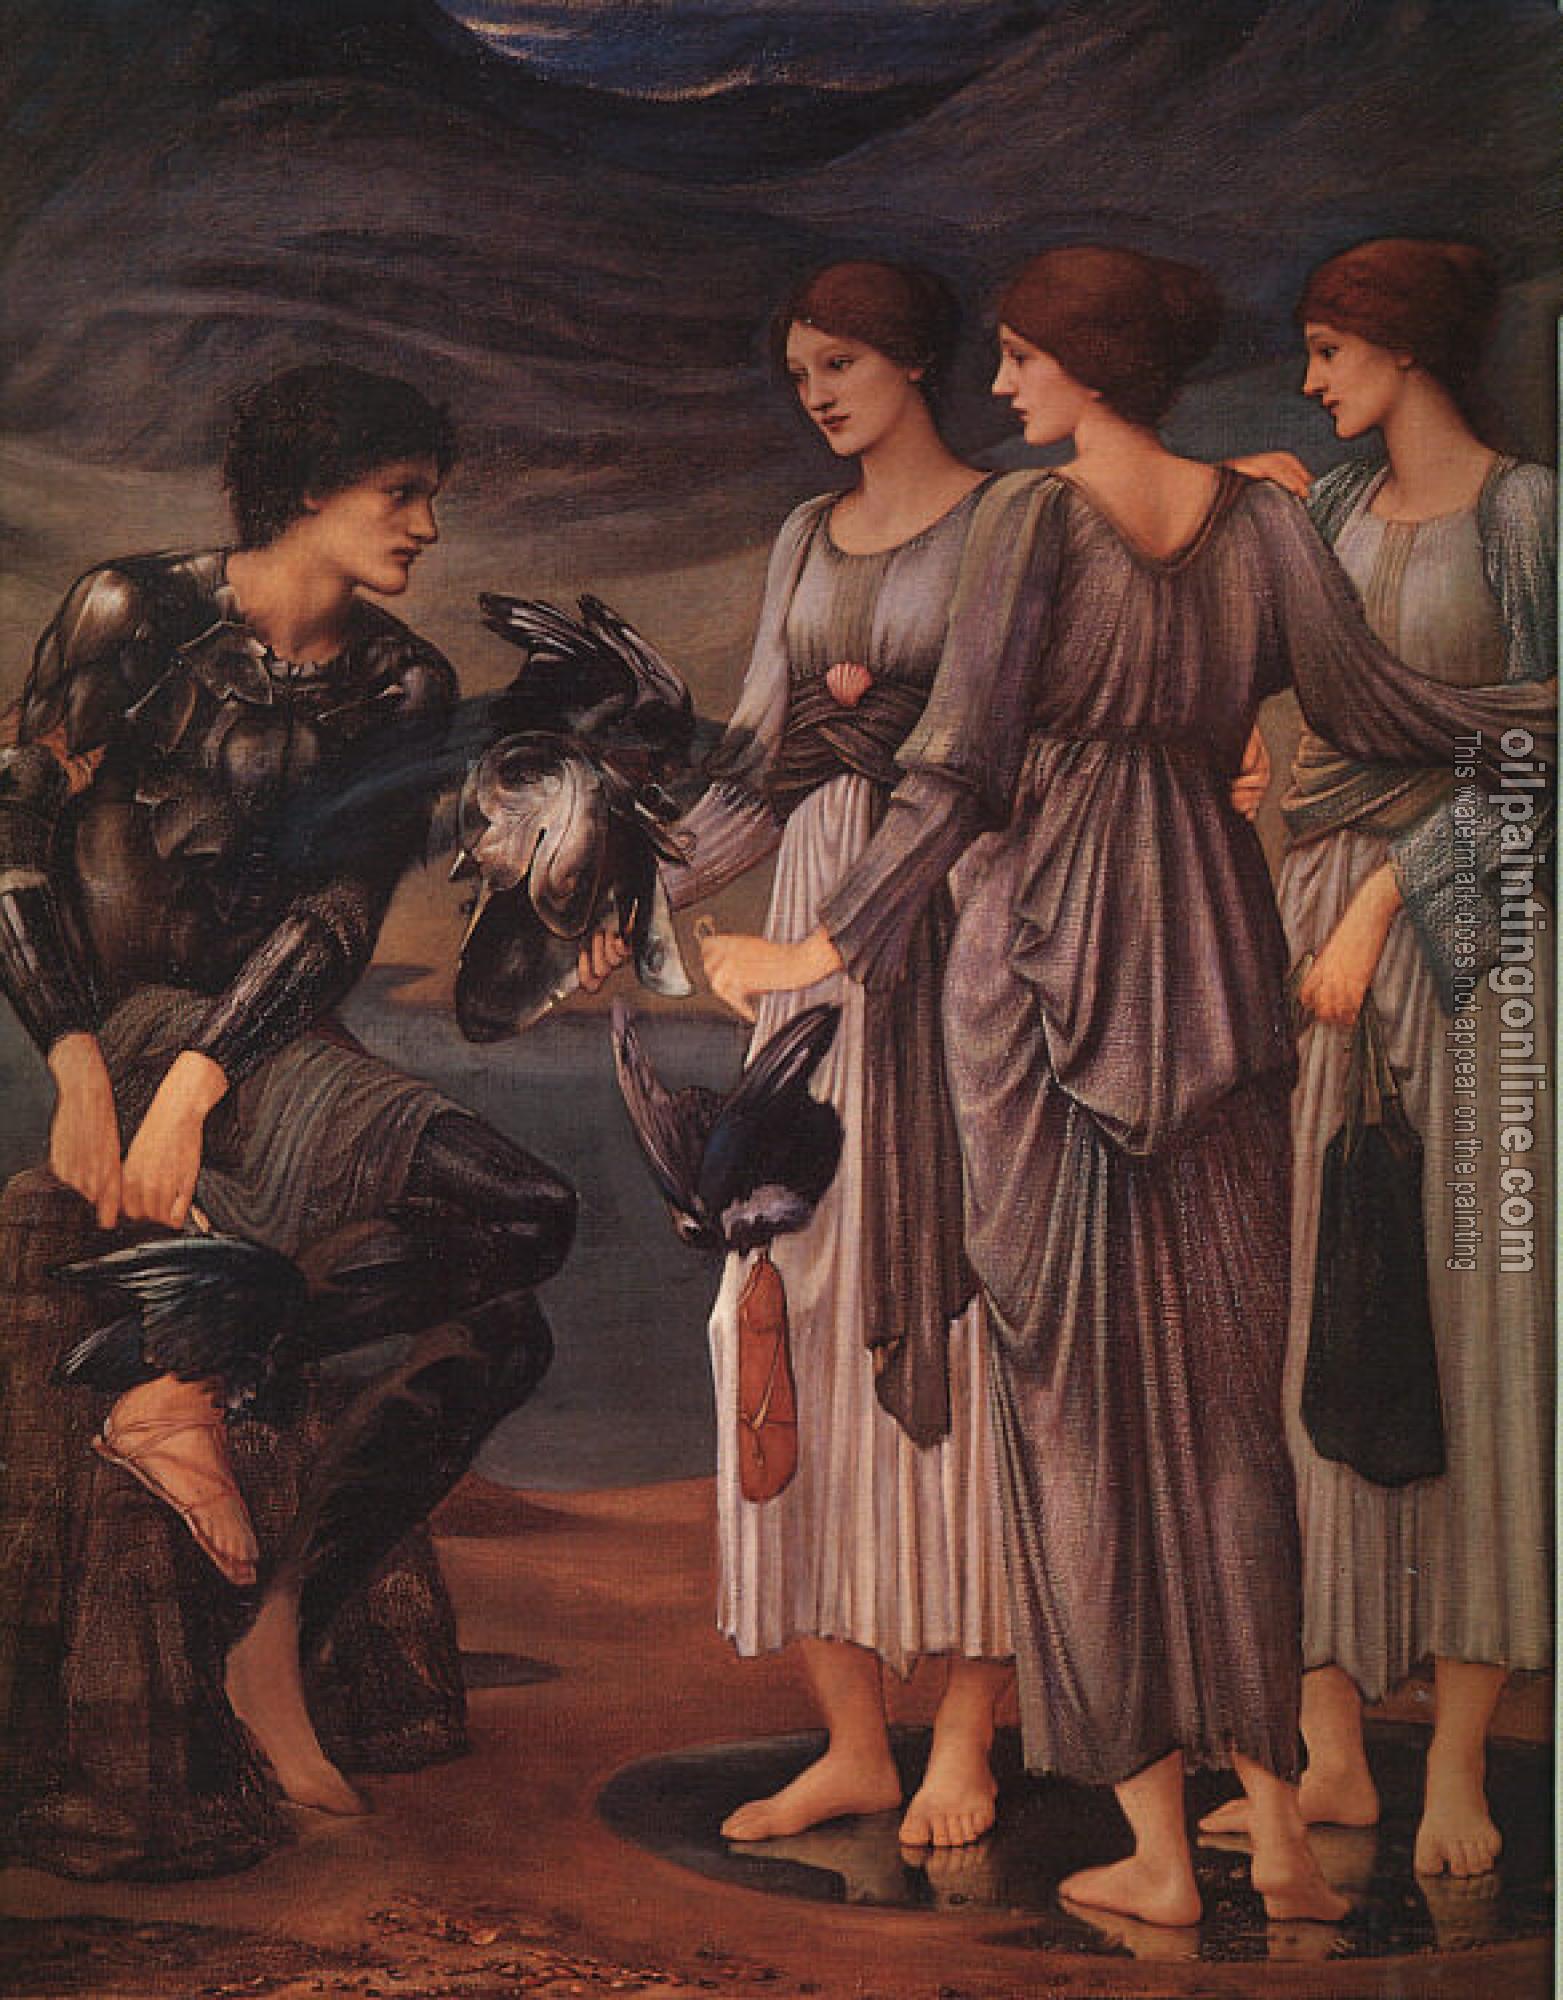 Burne-Jones, Sir Edward Coley - The Arming of Perseus